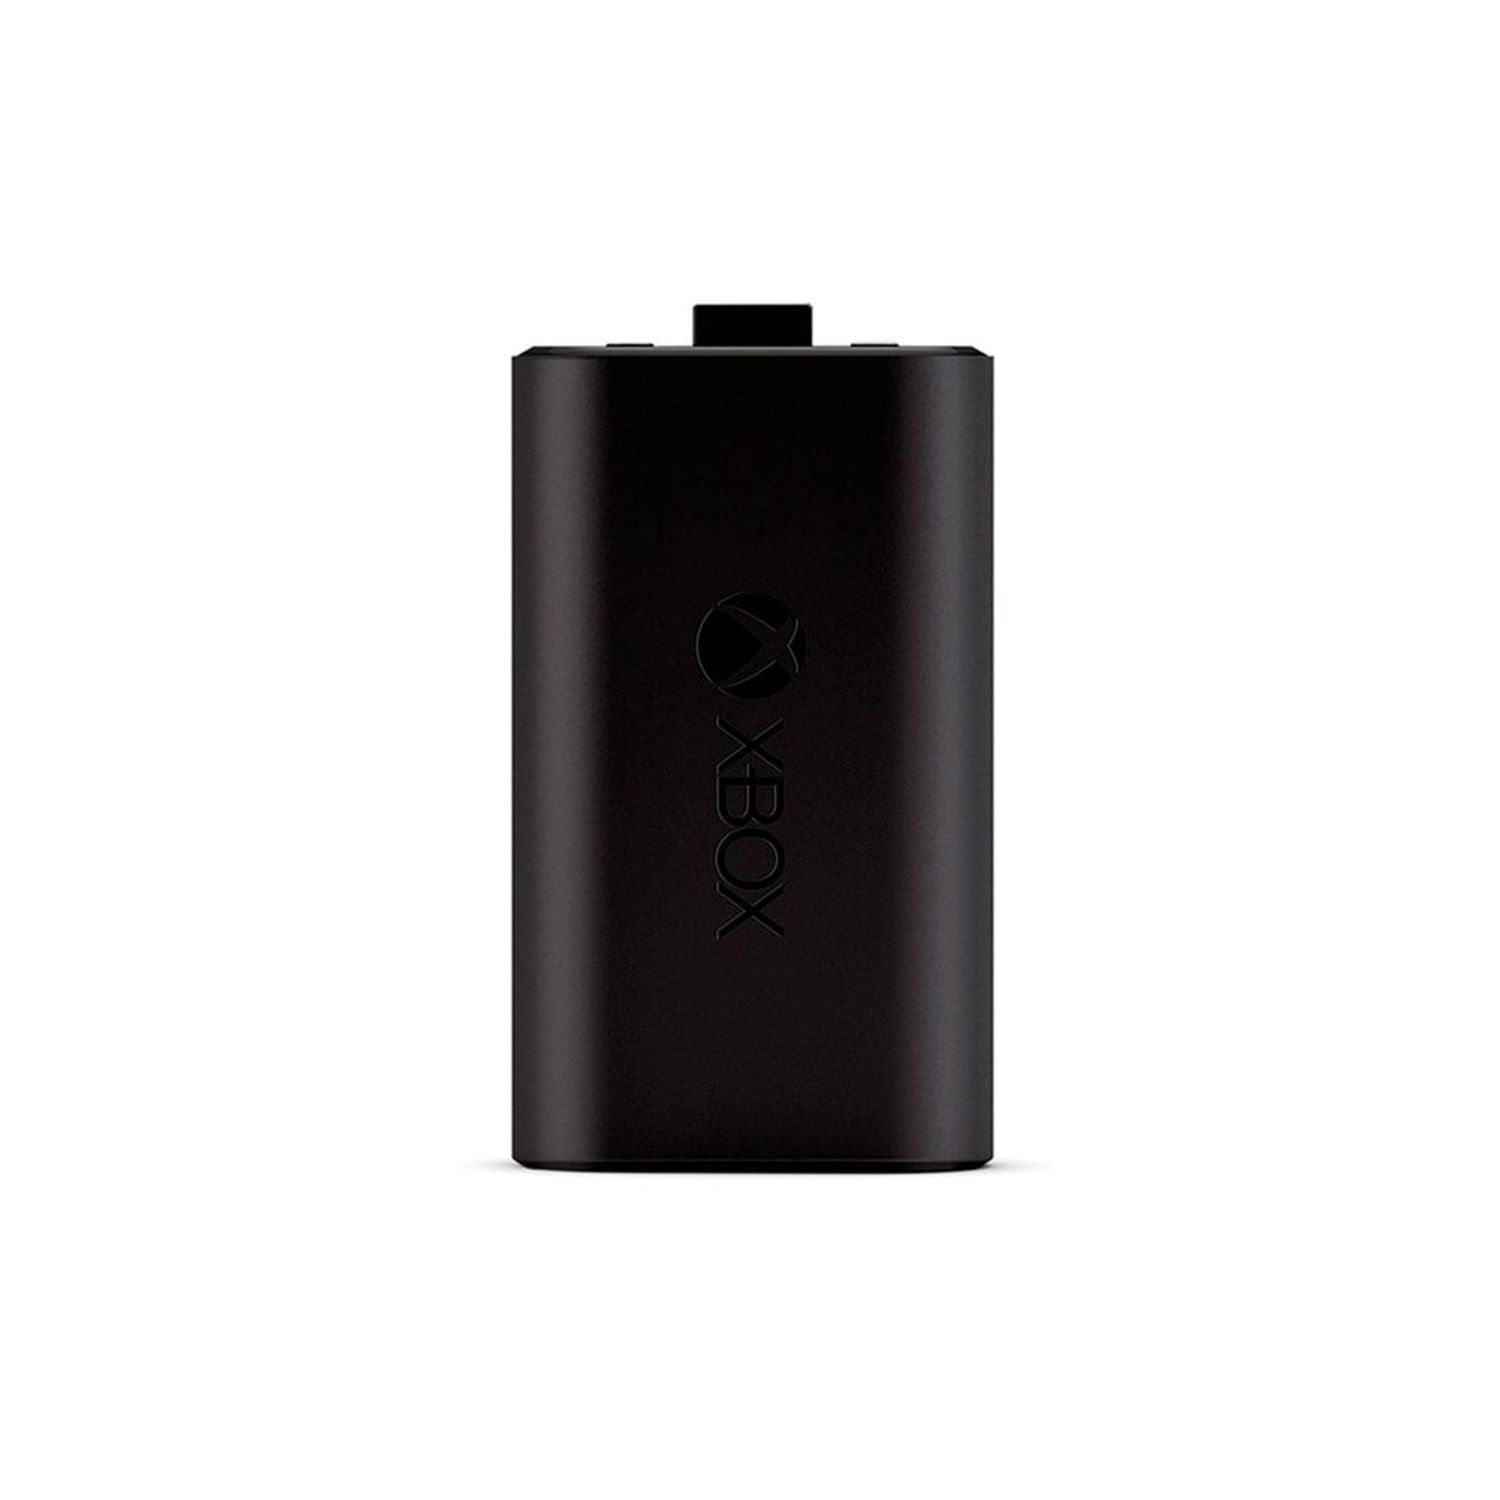 Mando Xbox Series X Wireless Volt + Bateria Recagable